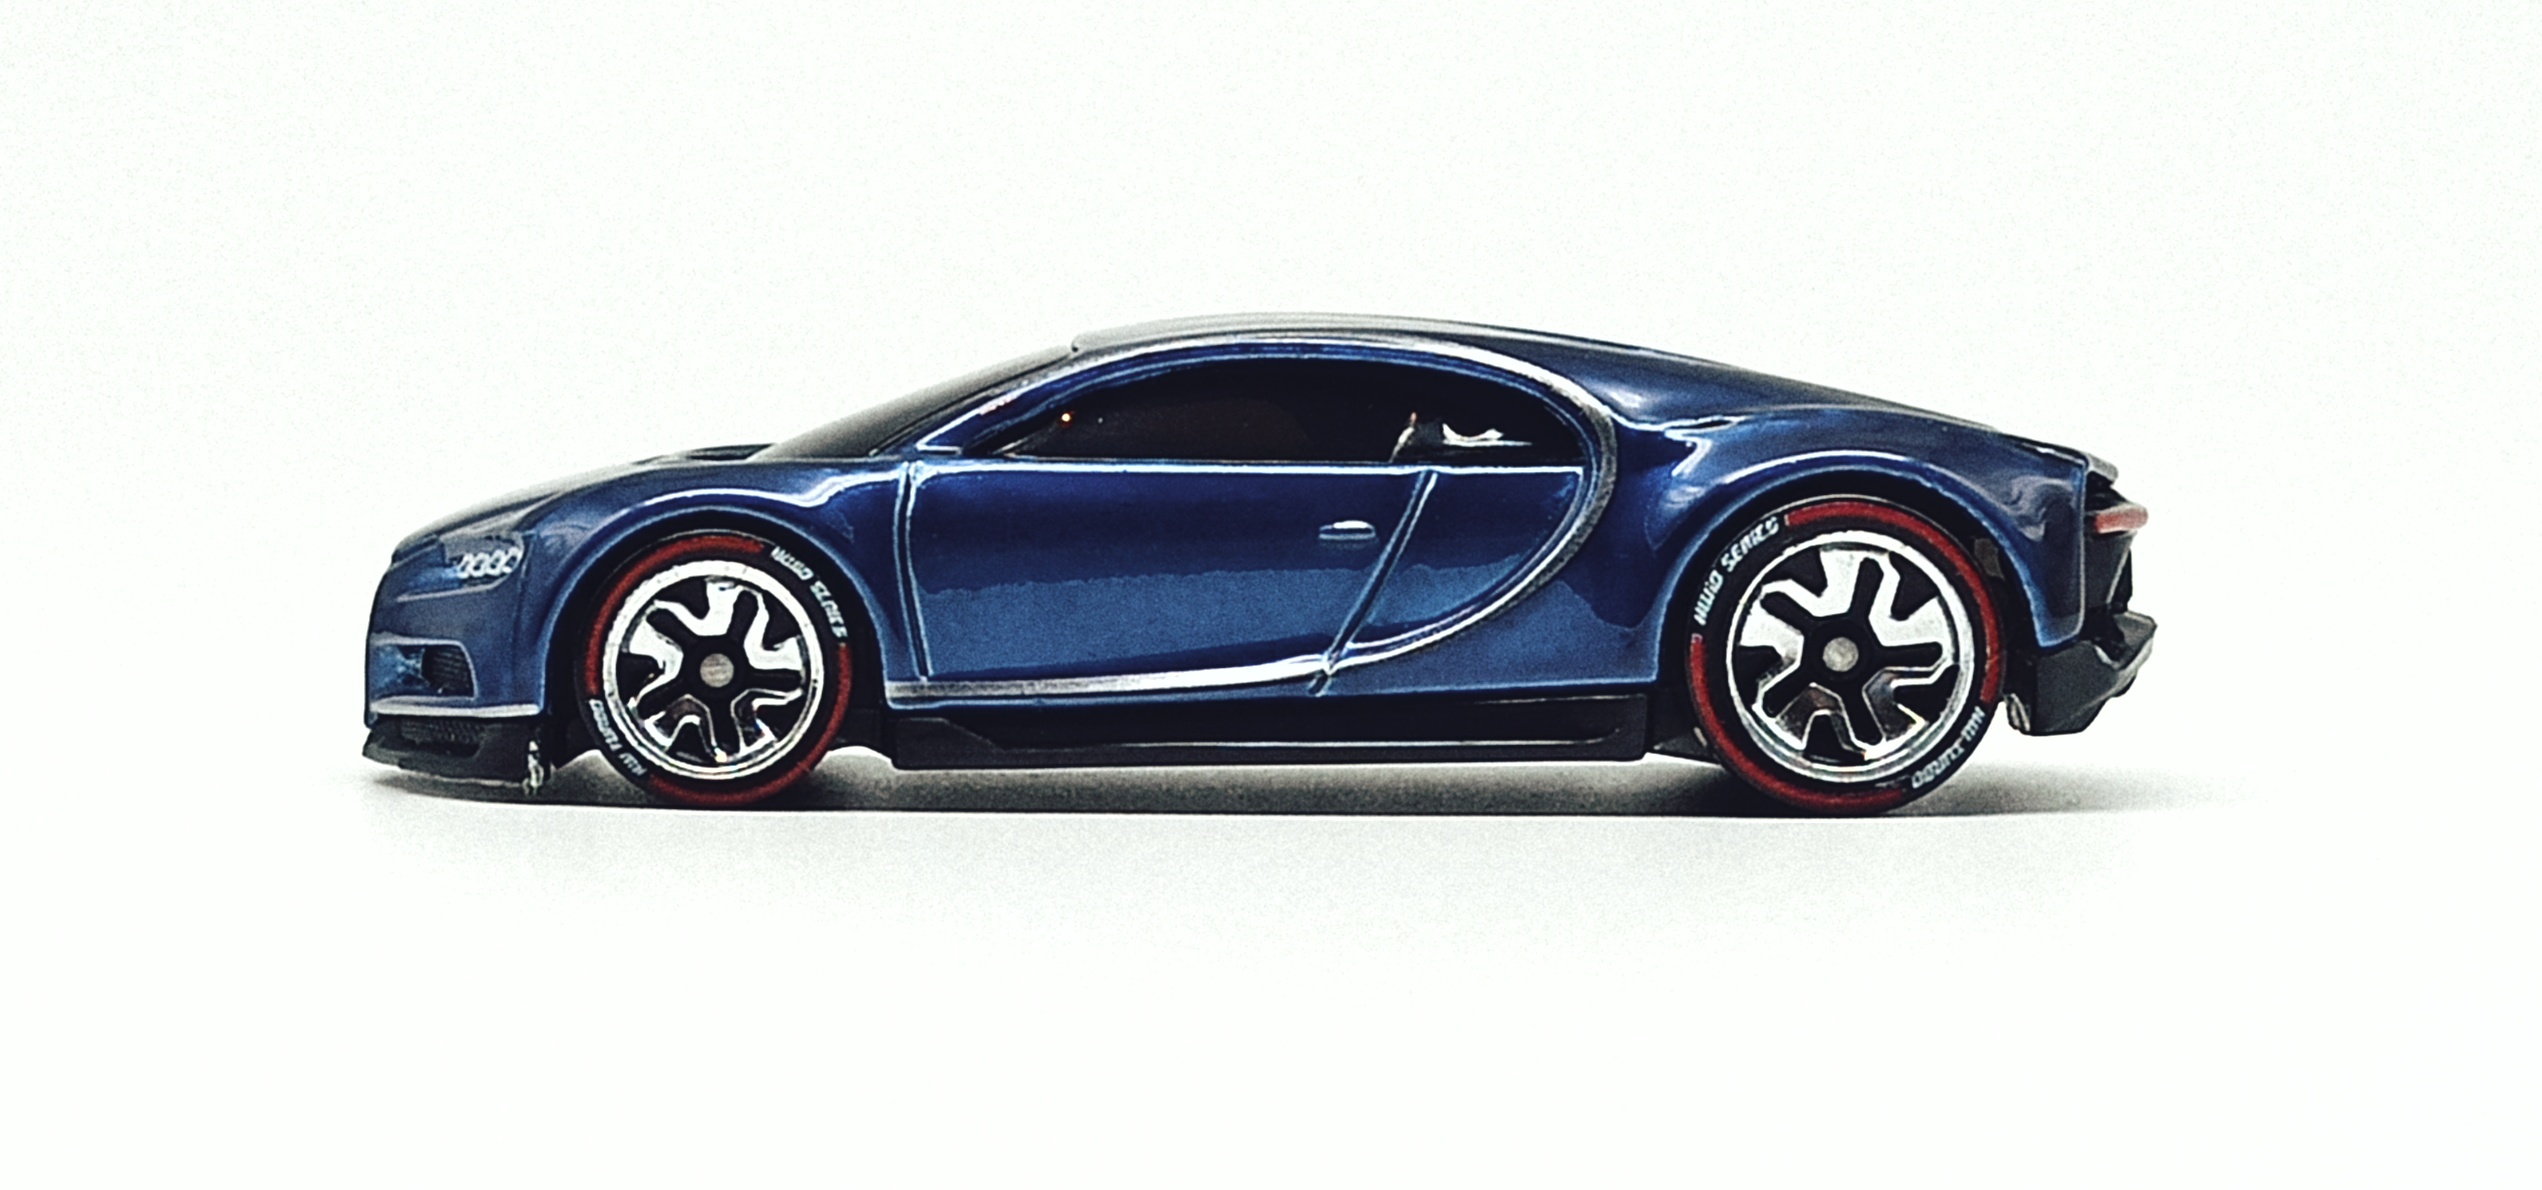 Hot Wheels id '16 Bugatti Chiron (HBG00) 2021 HW Turbo (3/4) spectraflame blue side